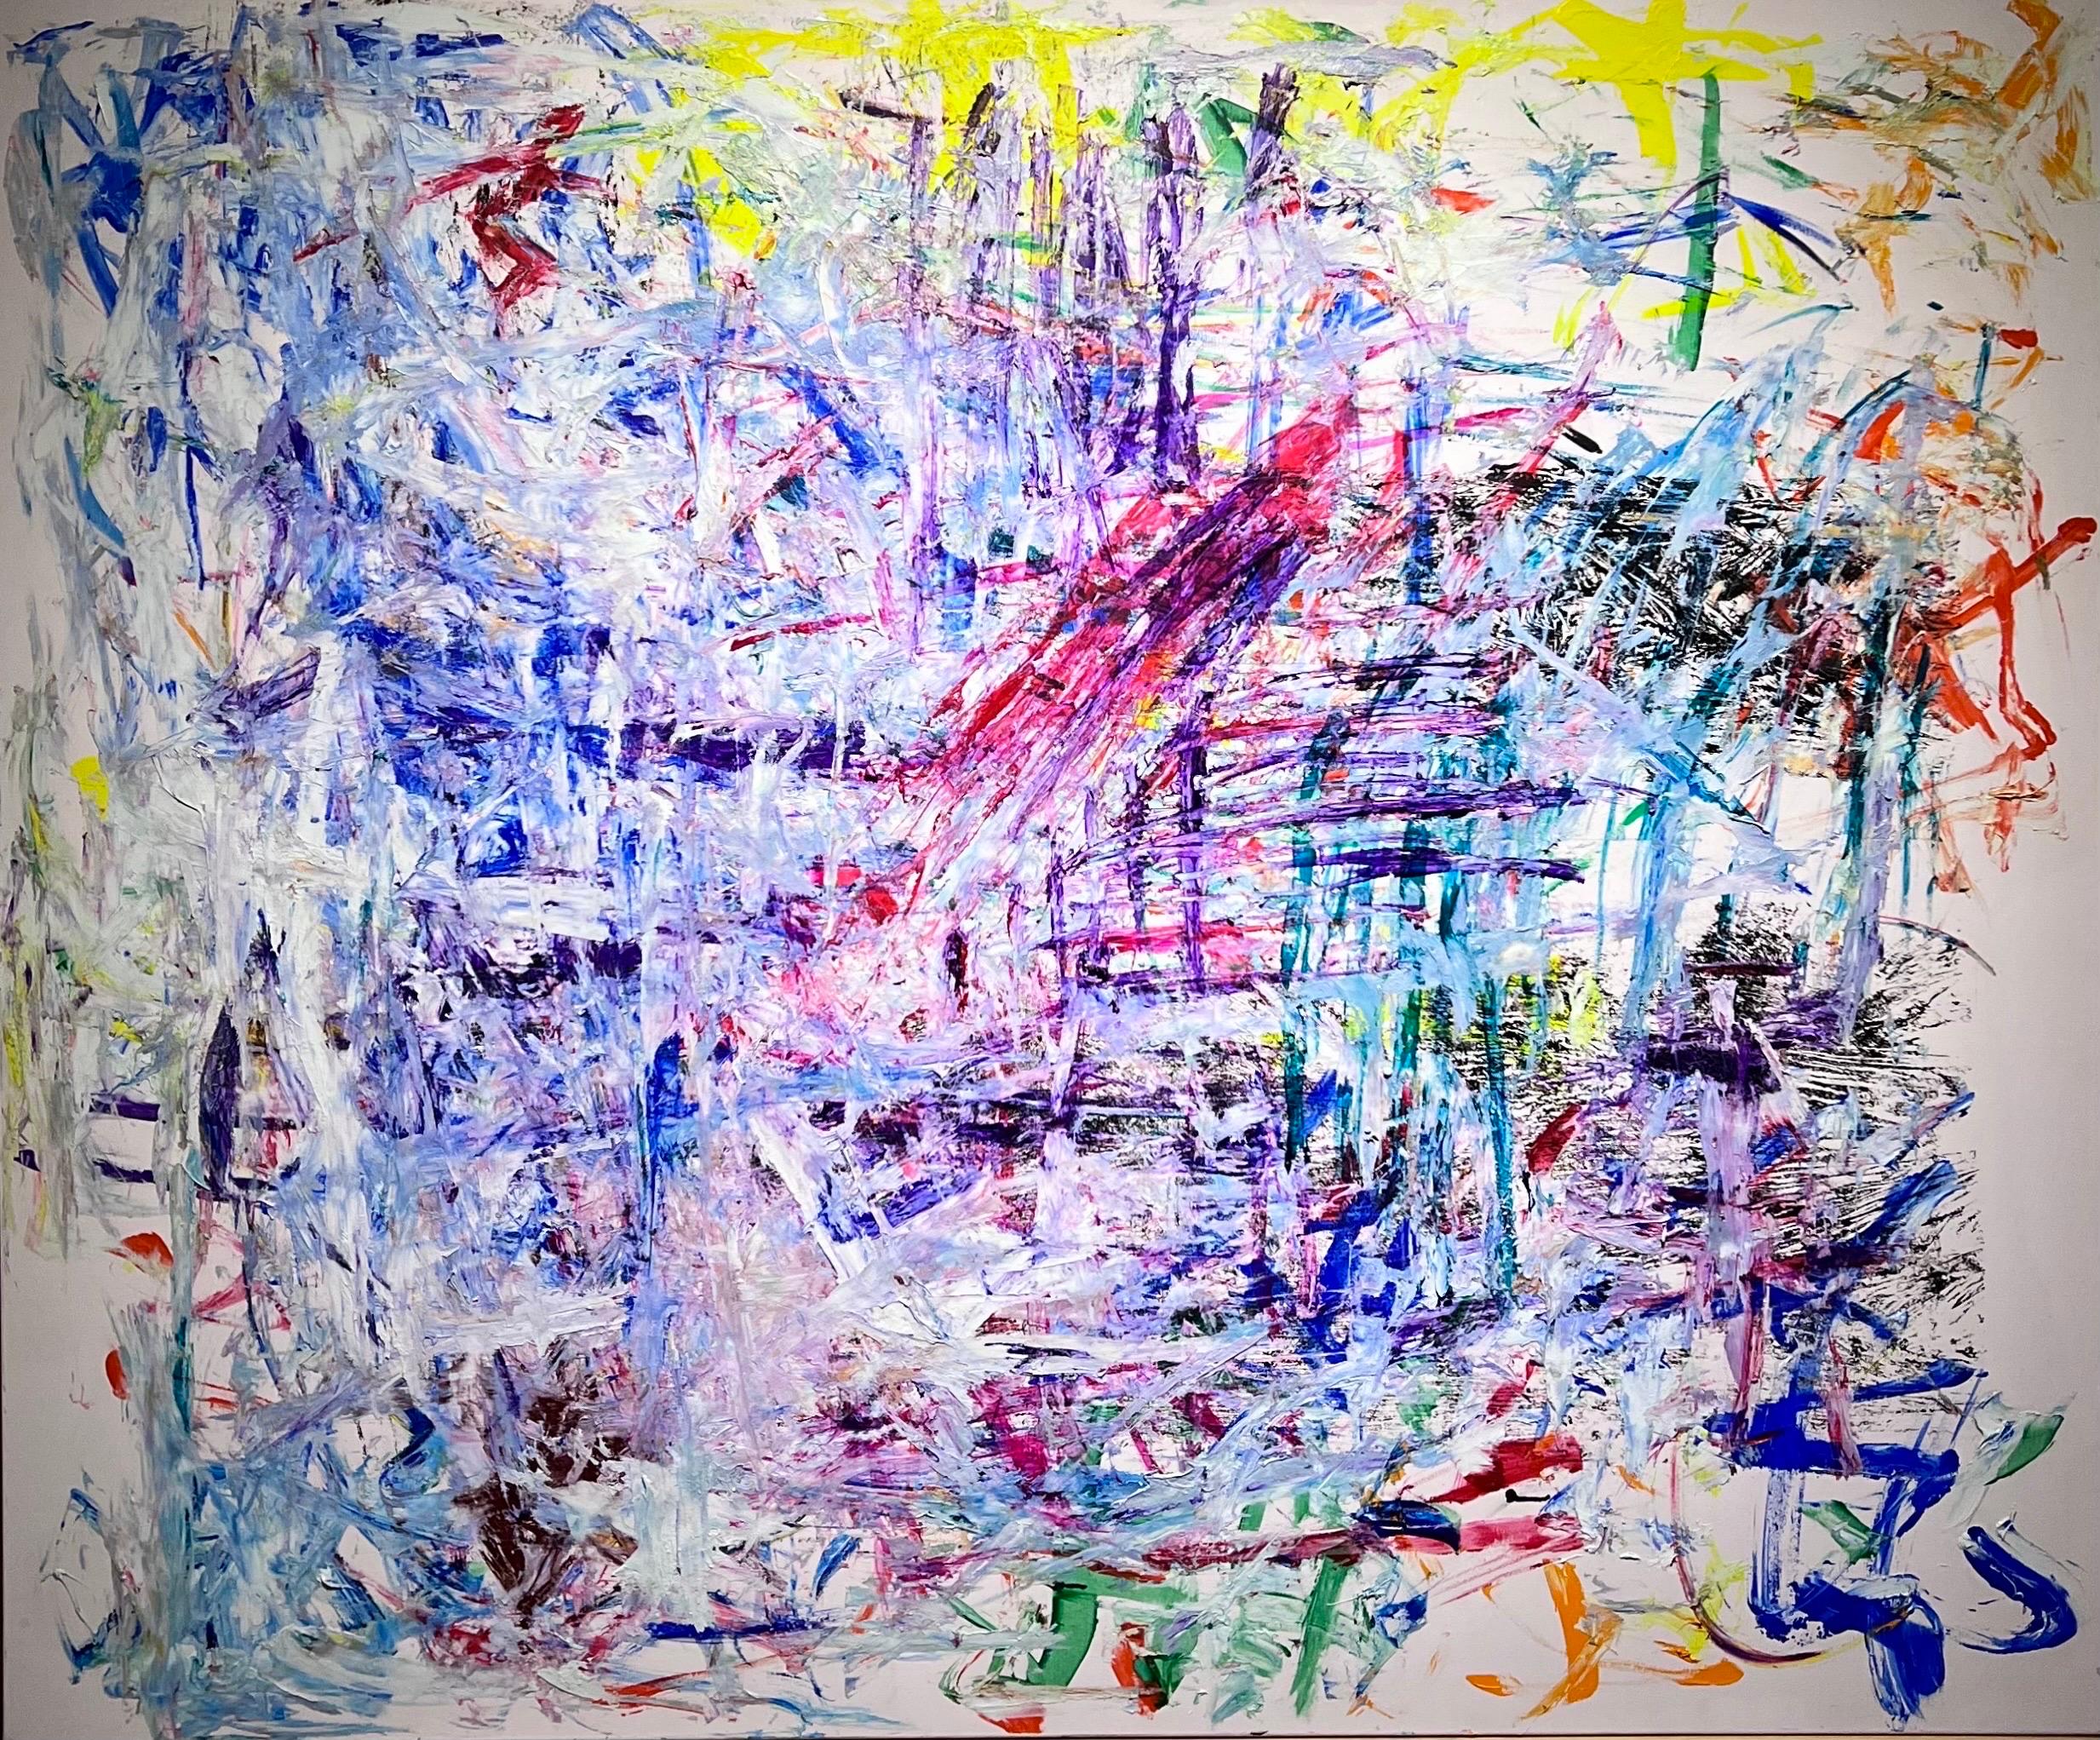 Abstract Painting Hsu Tung Lung - "Abstract Garden" No8, peinture abstraite technique mixte, 2017